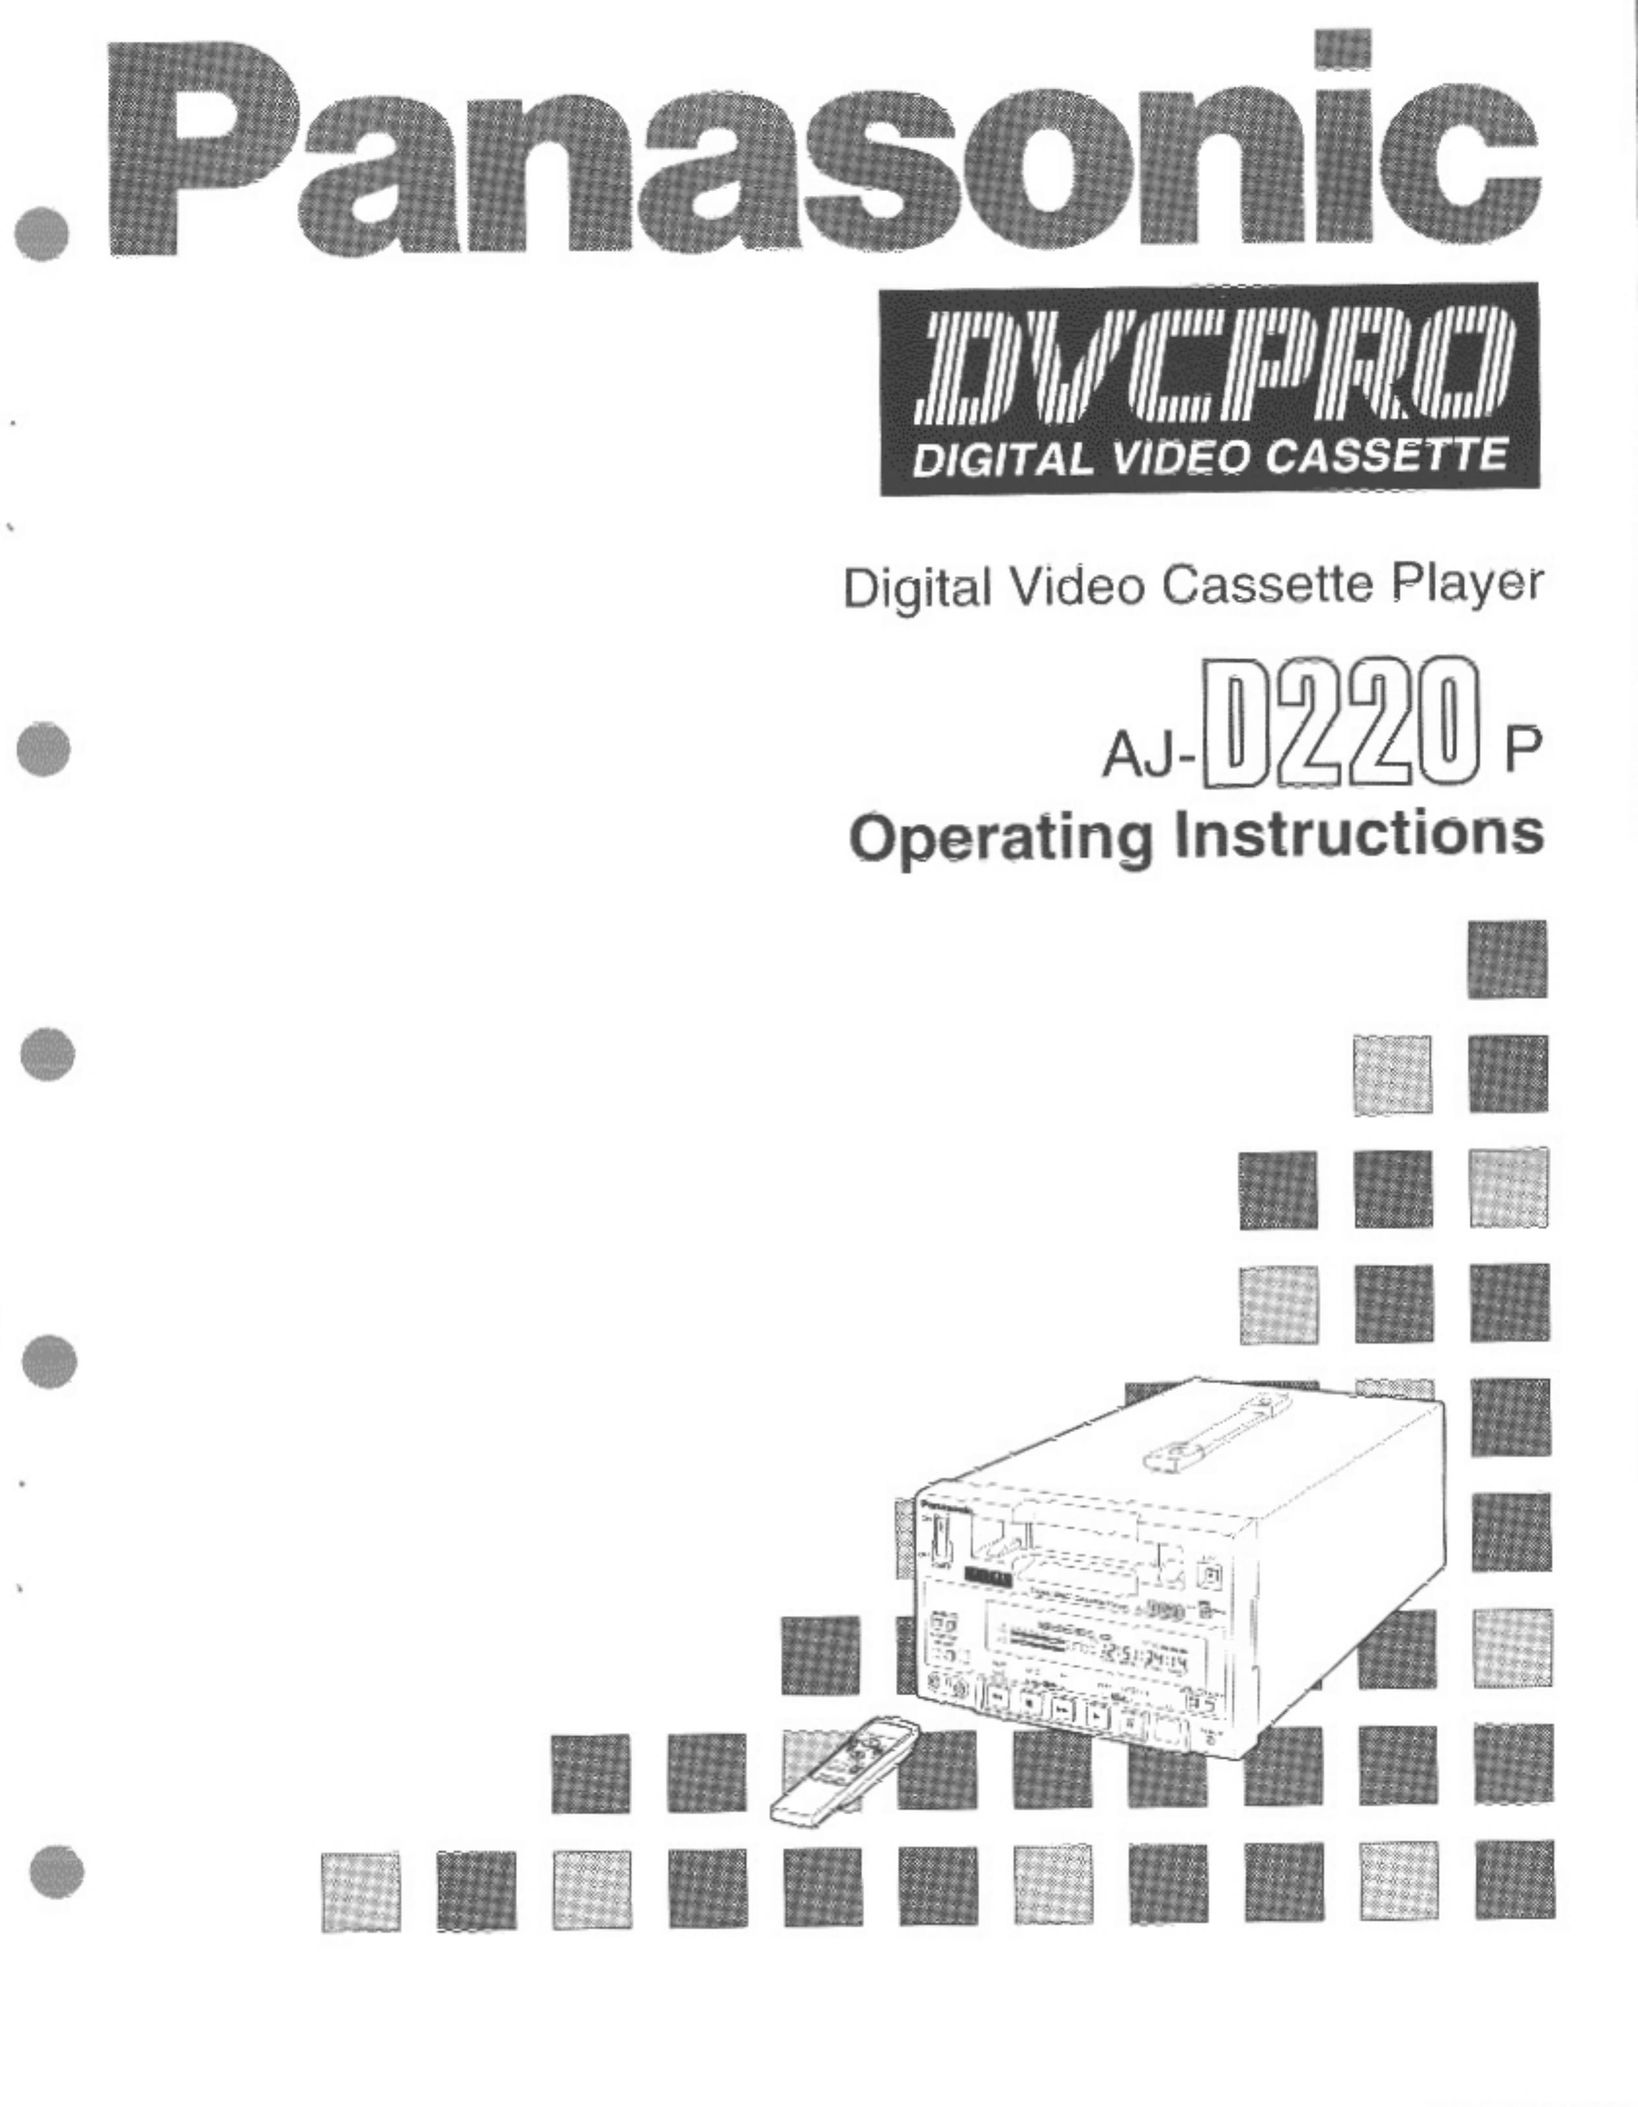 Panasonic AJ-D220 P Cassette Player User Manual